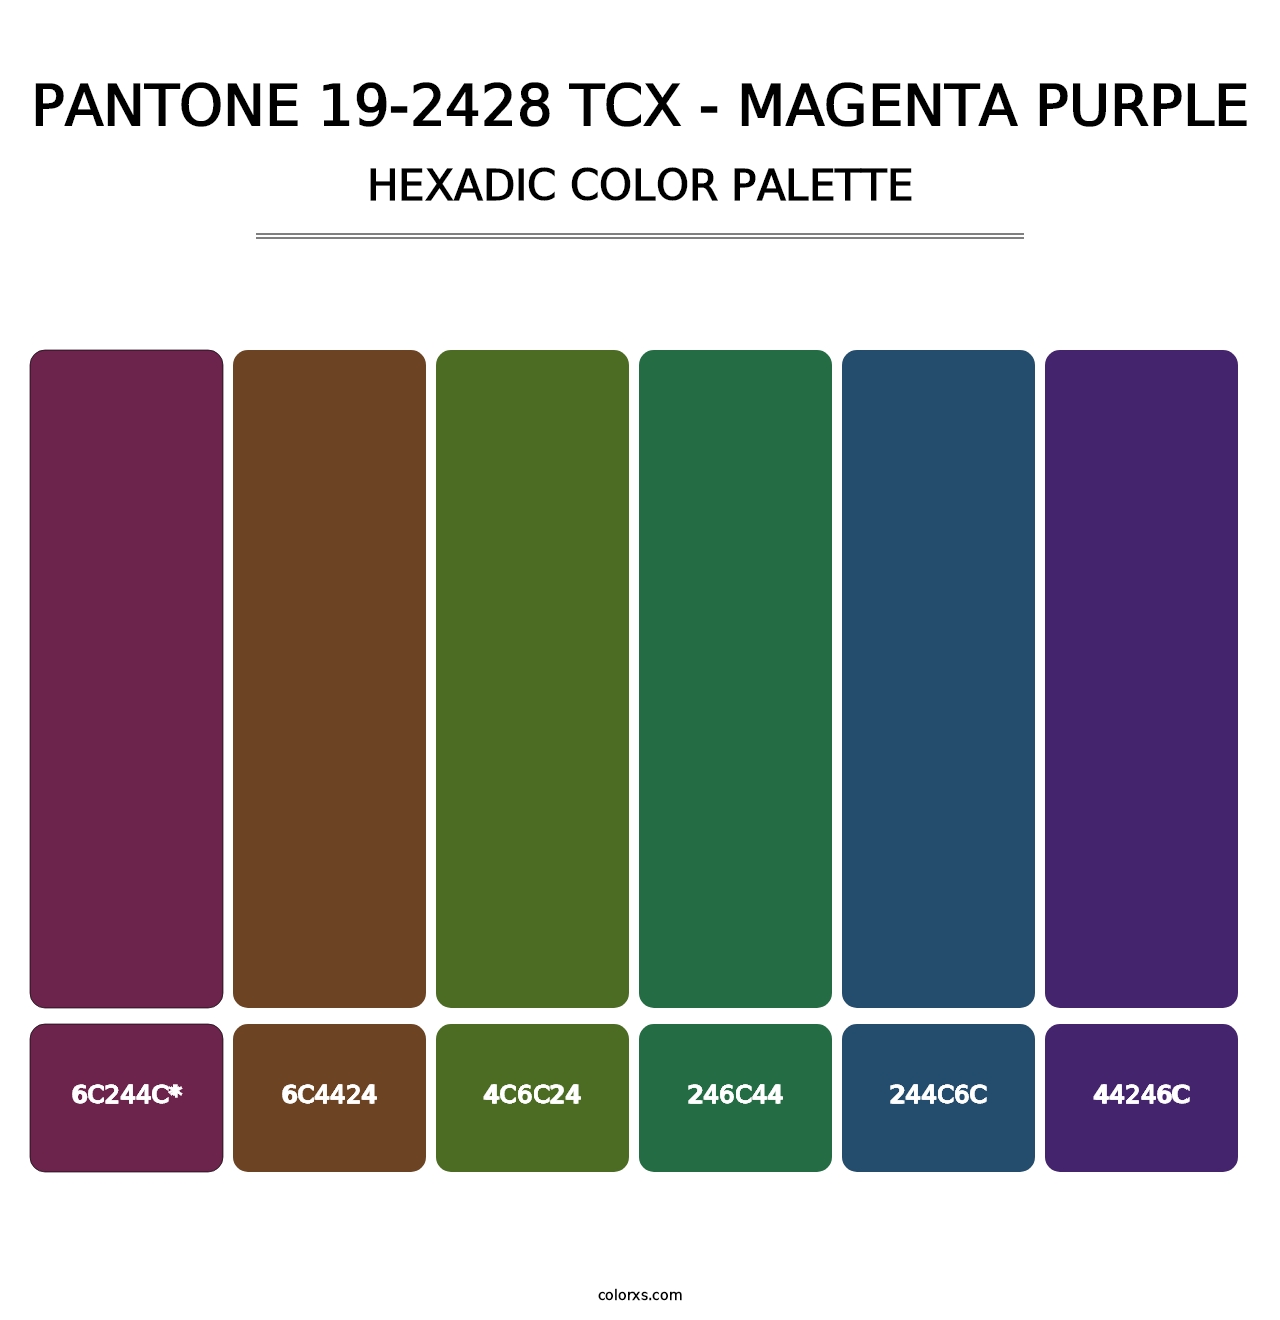 PANTONE 19-2428 TCX - Magenta Purple - Hexadic Color Palette